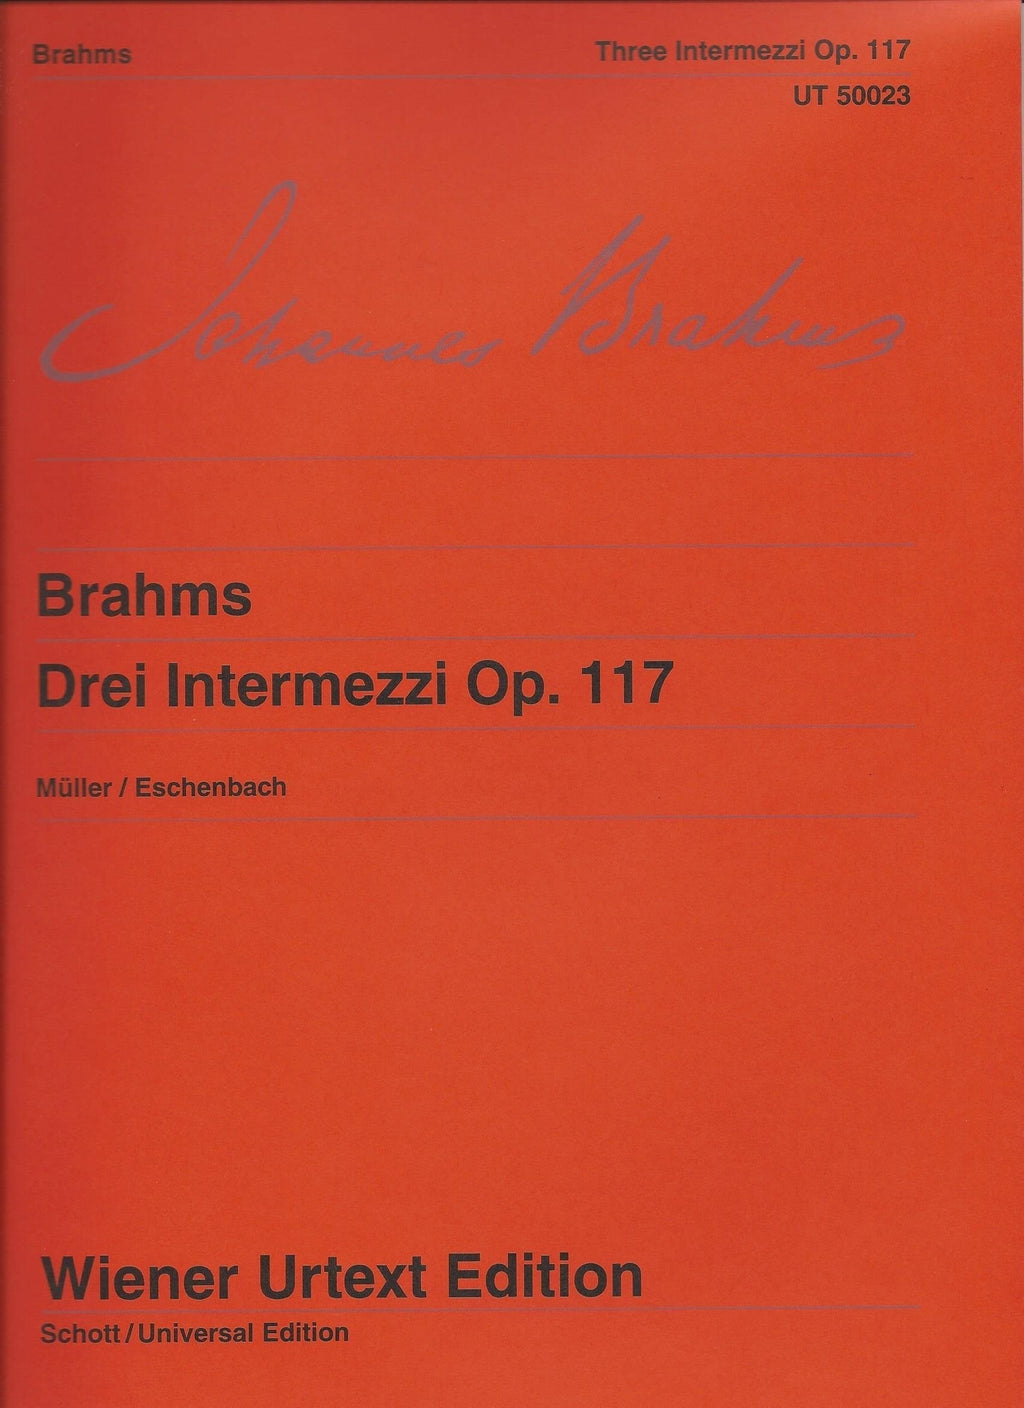 Johannes Brahms Drei Intermezzi (3 Intermezzos) Op. 117 Wiener Urtext Edition